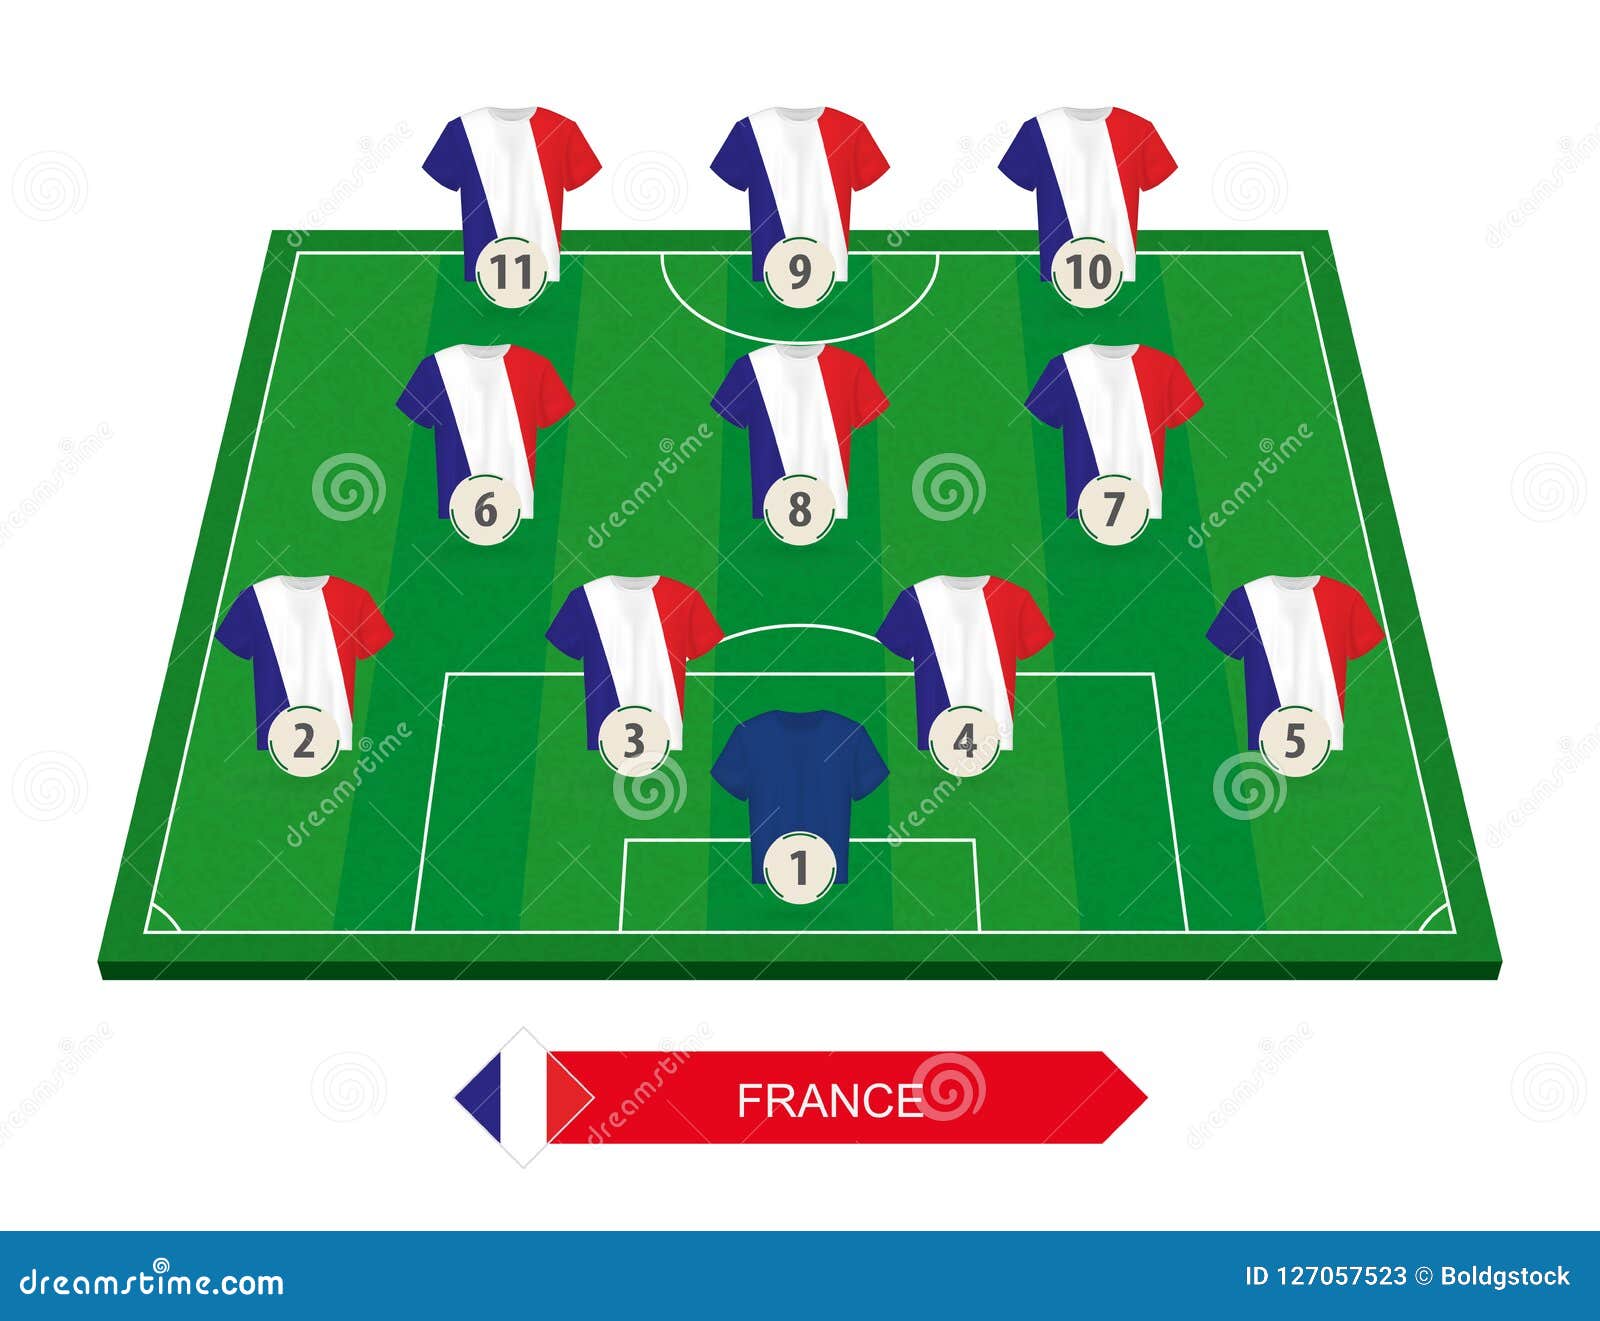 France Football Team Lineup On Soccer Field For European Football ...